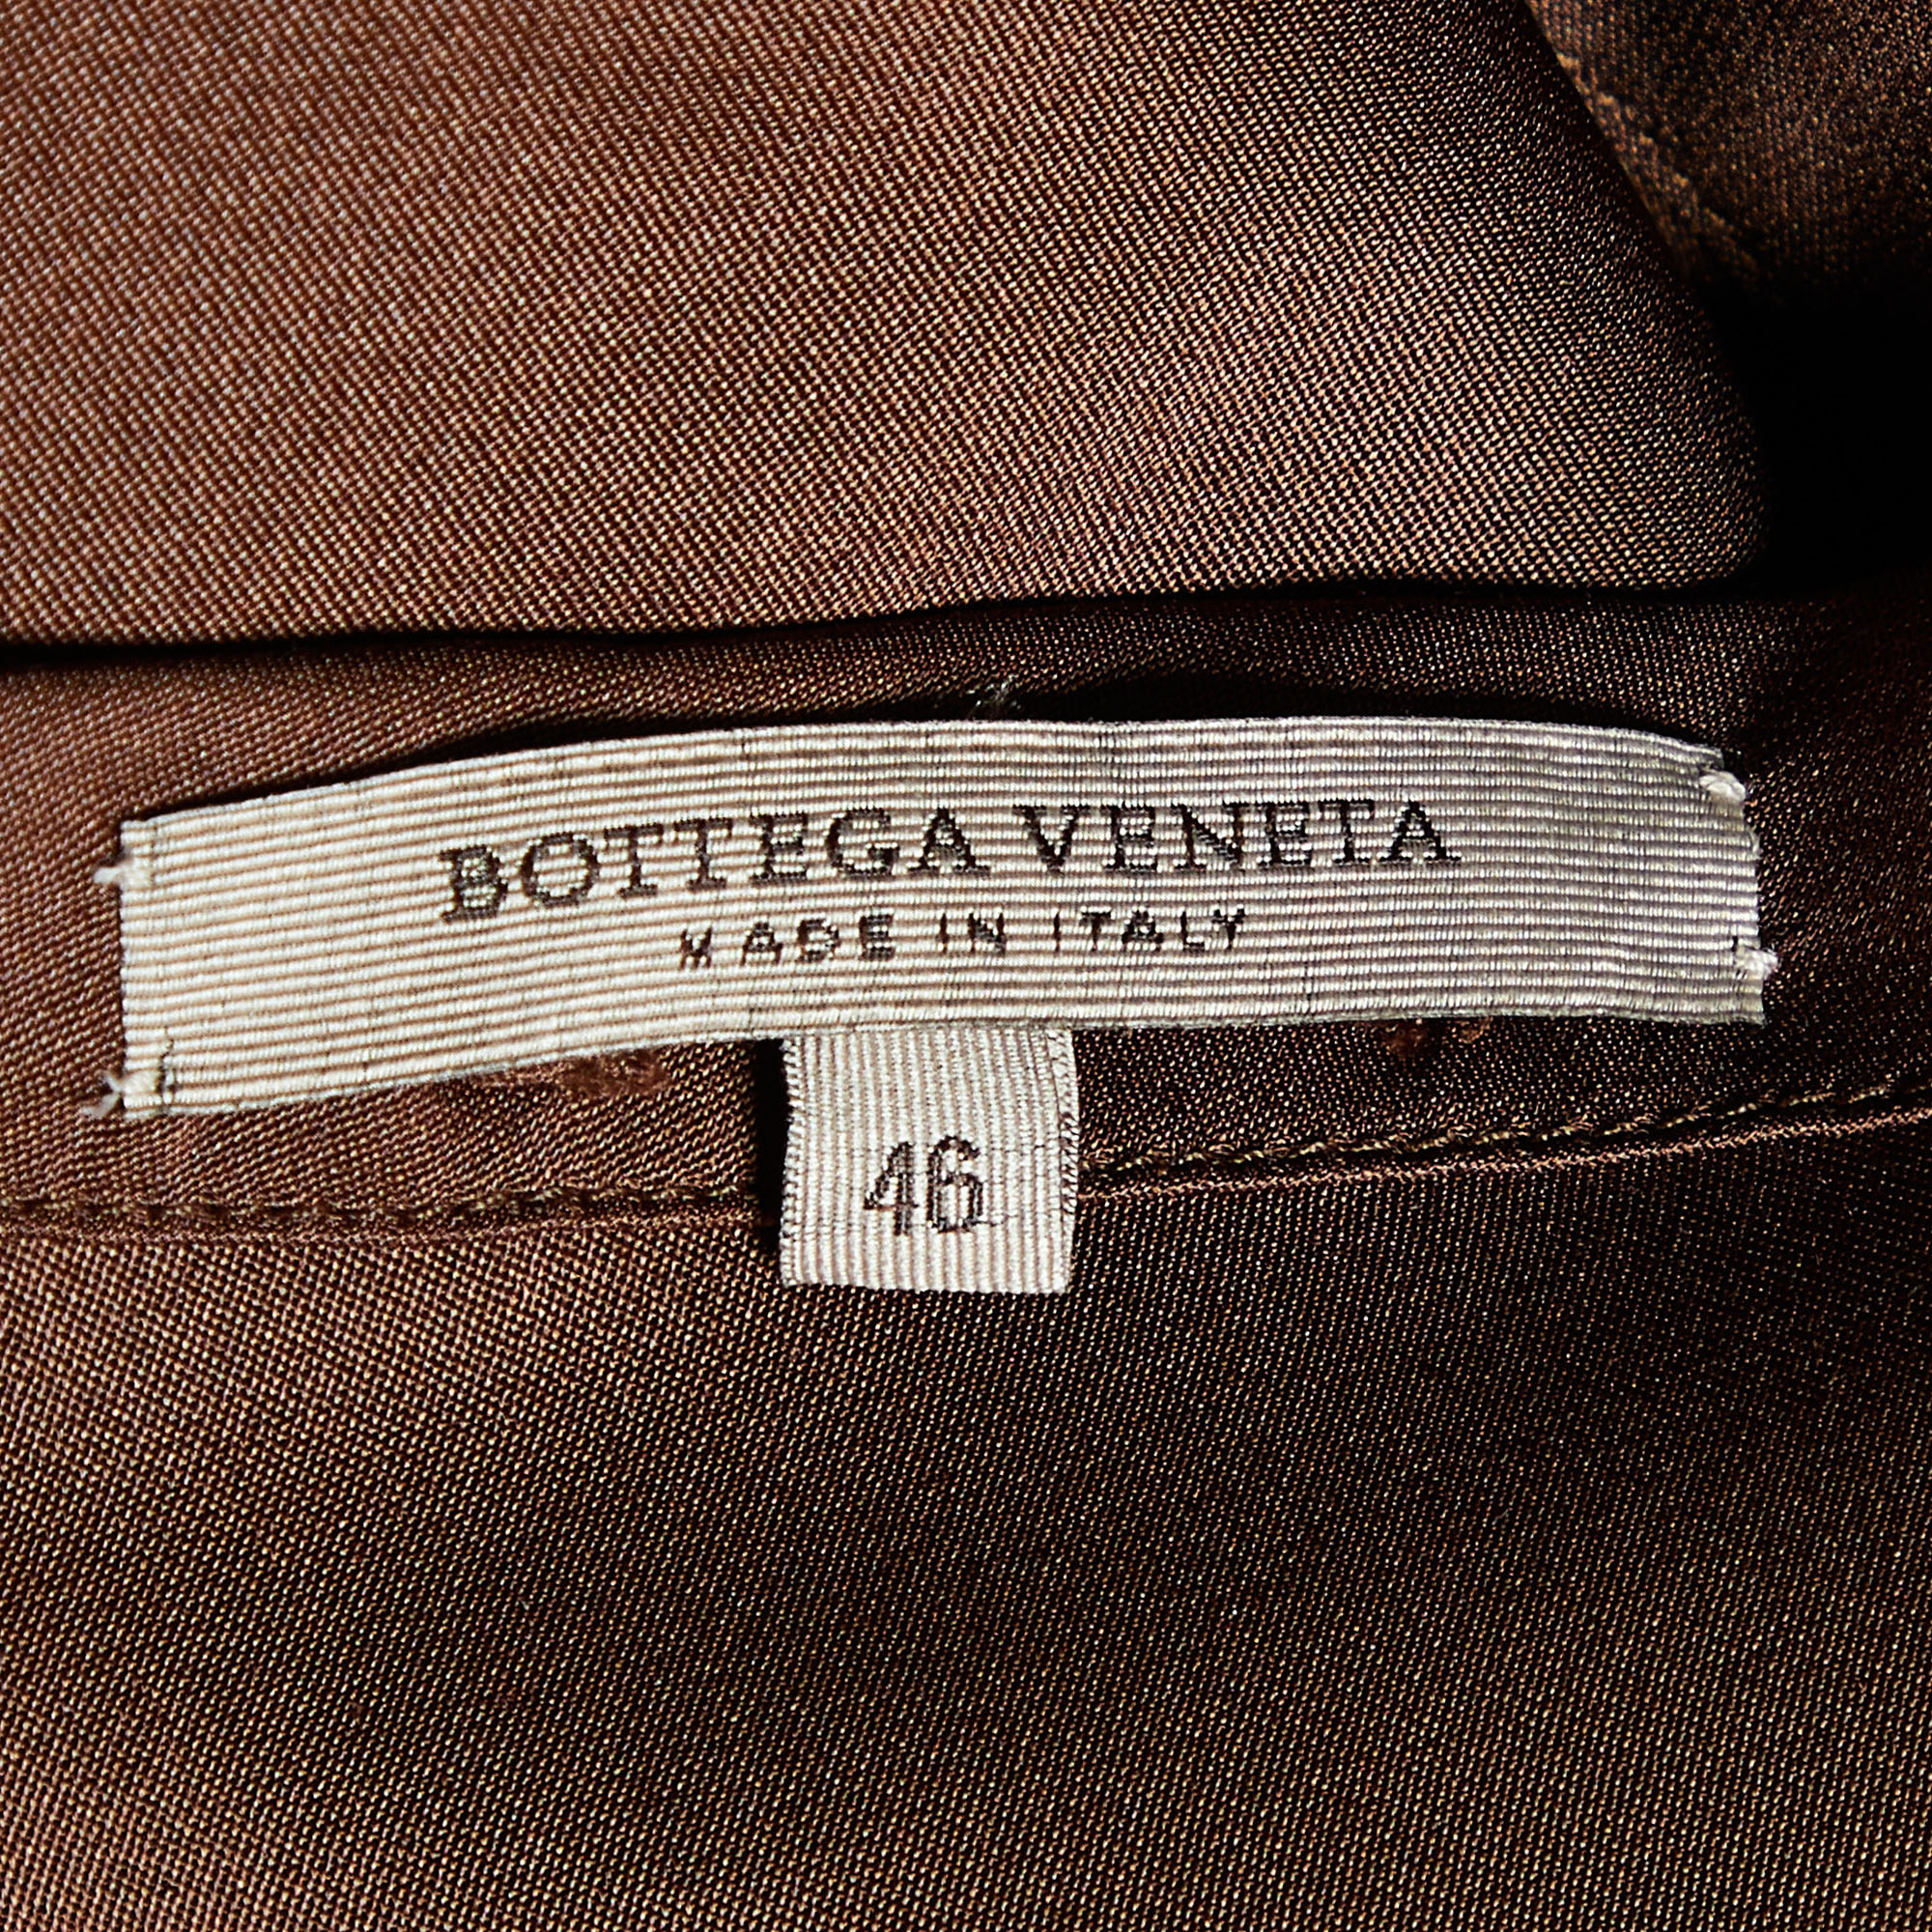 Bottega Veneta Brown Silk Satin Ruffle Detail Mini Dress L